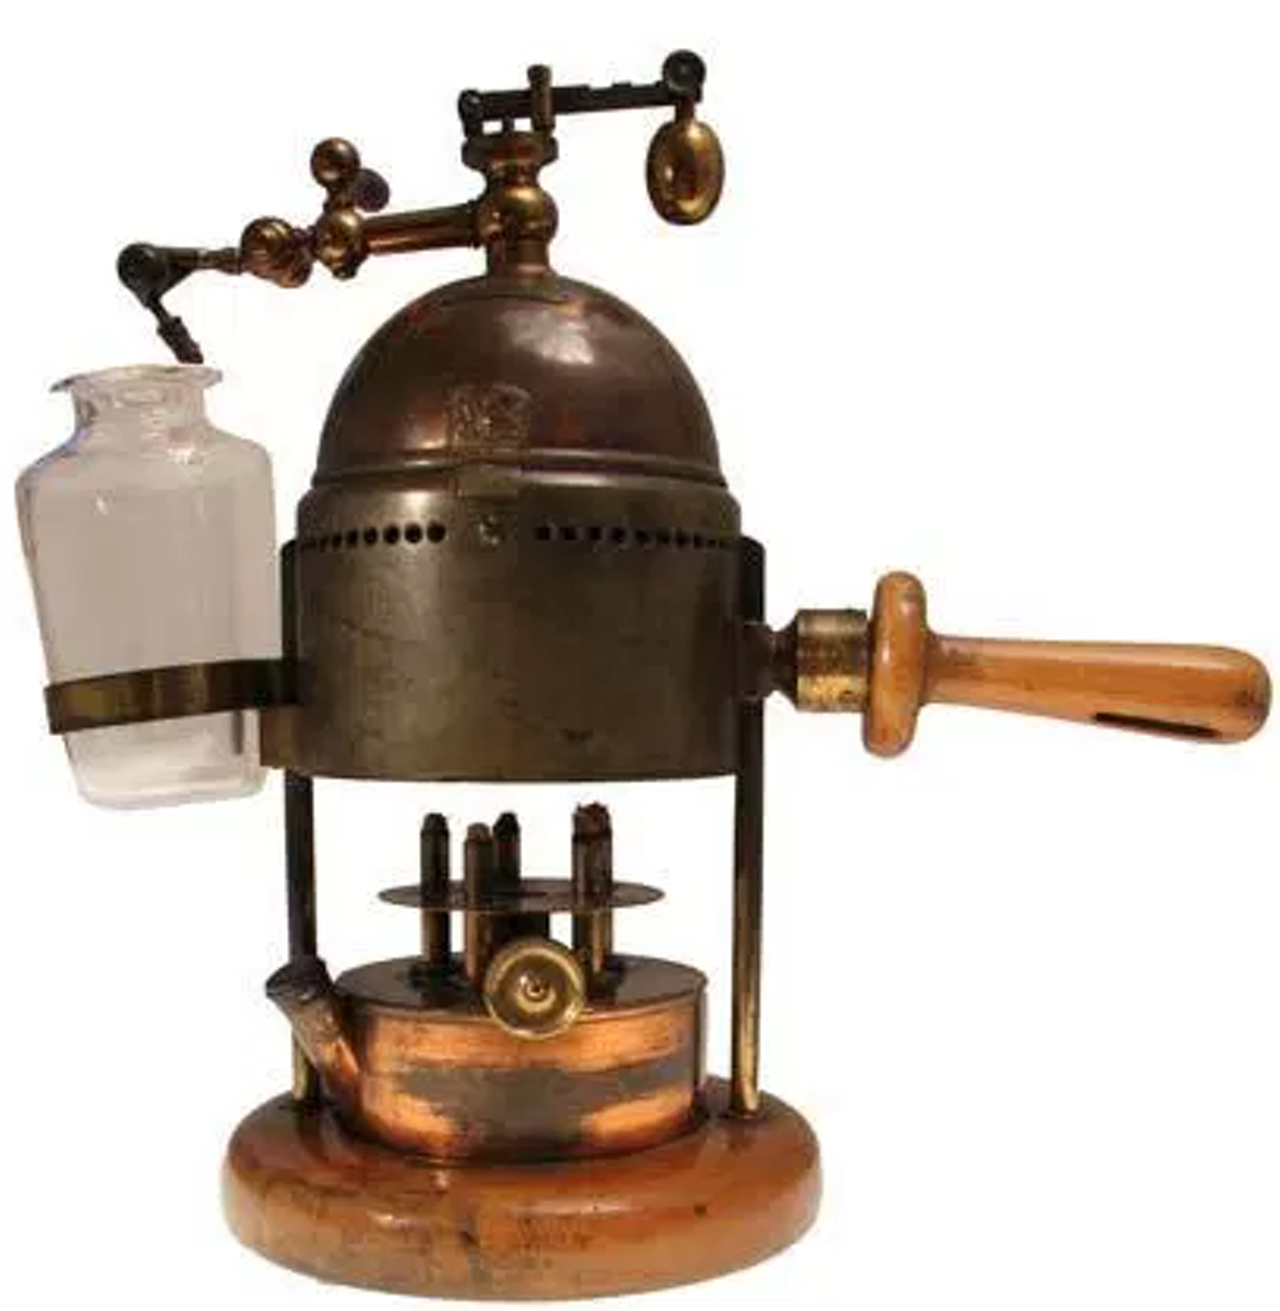 Carbolic acid sprayer (c. 1885) used for antisepsis.